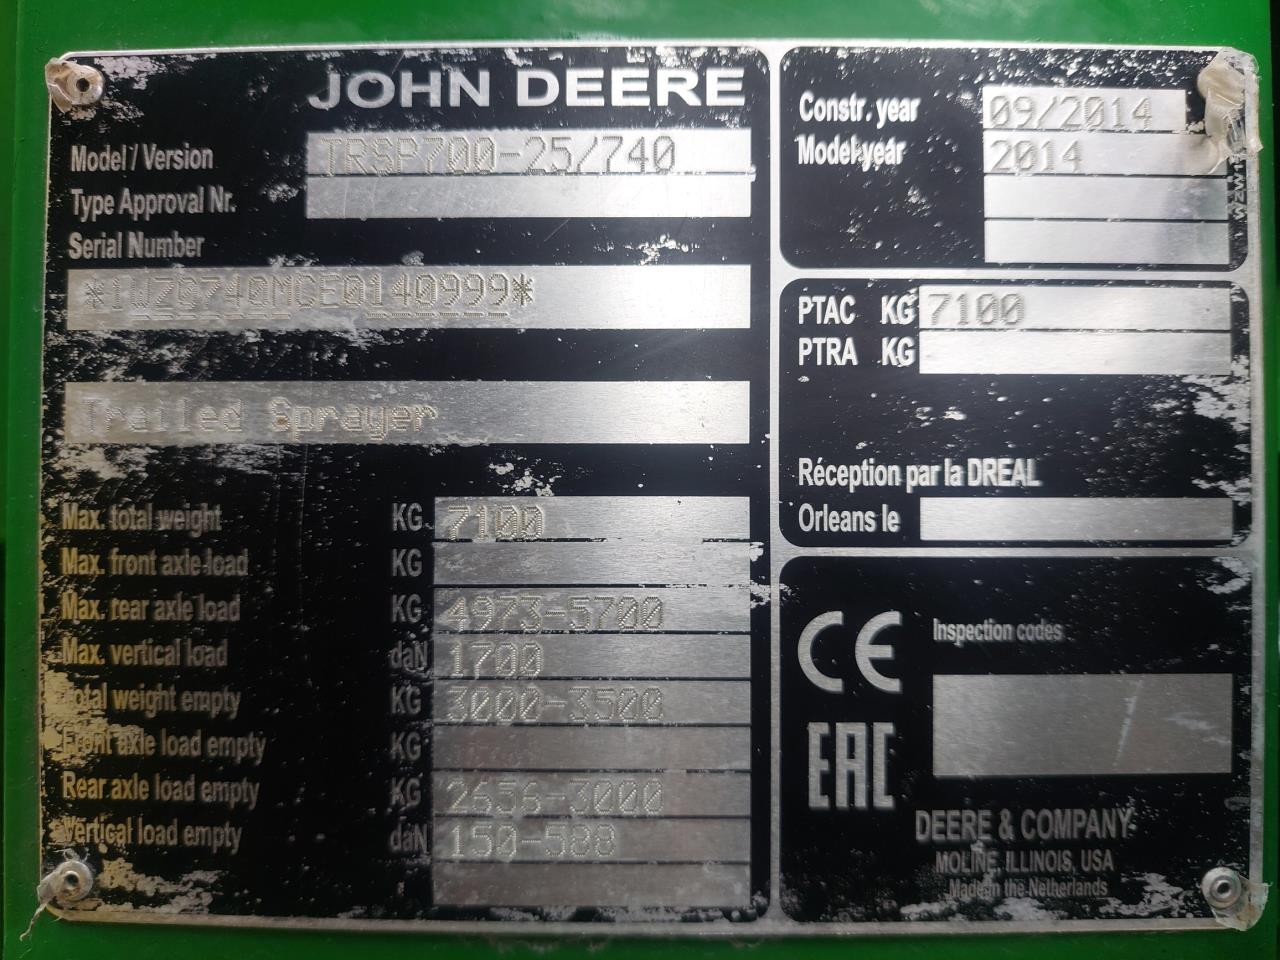 John Deere M740i - 28m (30m)